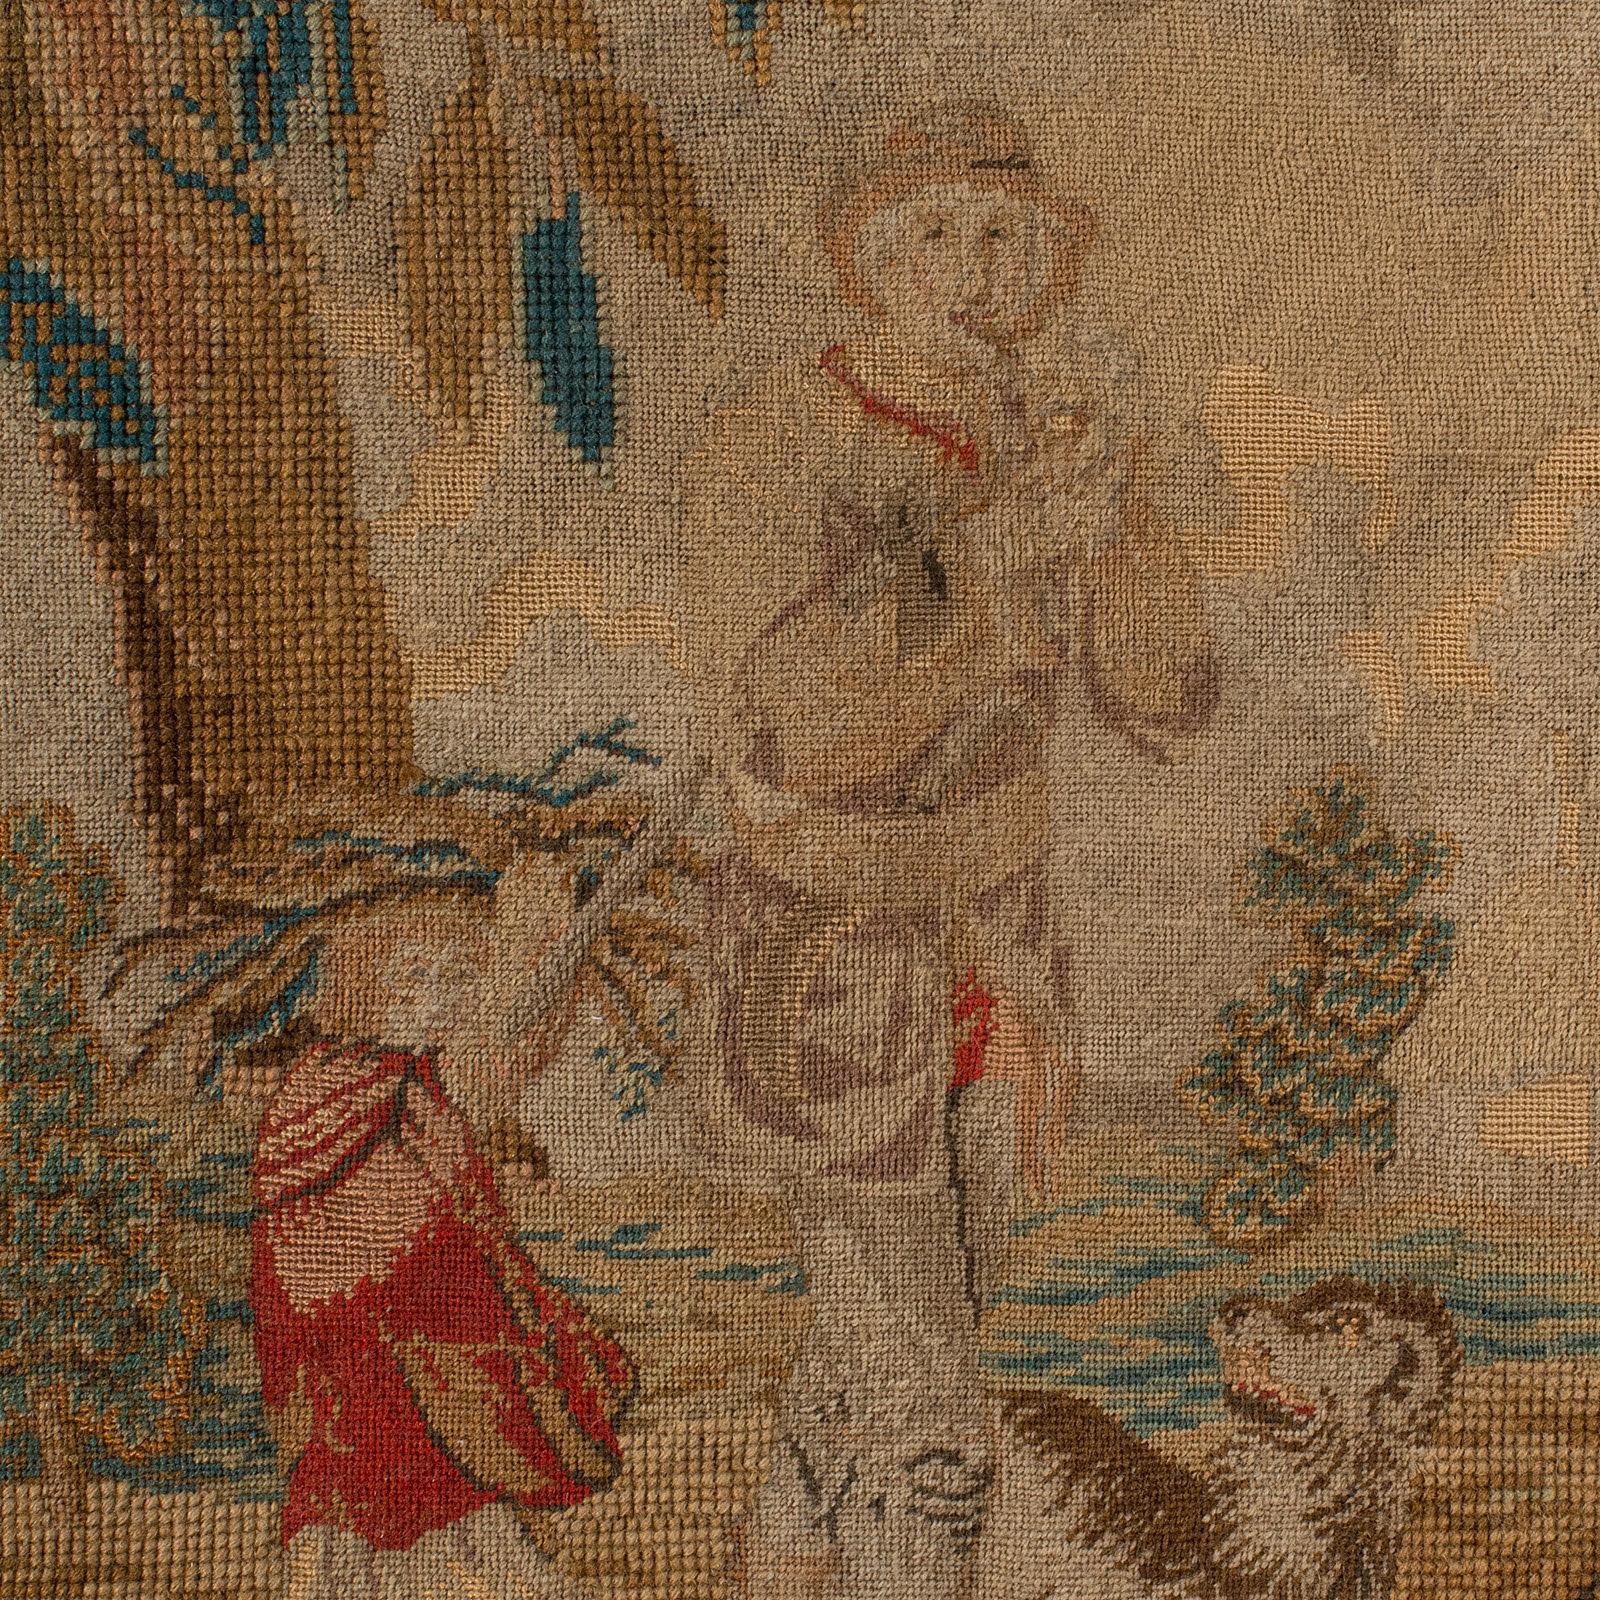 18th Century Antique Tapestry Panel, English, Needlepoint, Burr Walnut, Decorative, C.1800